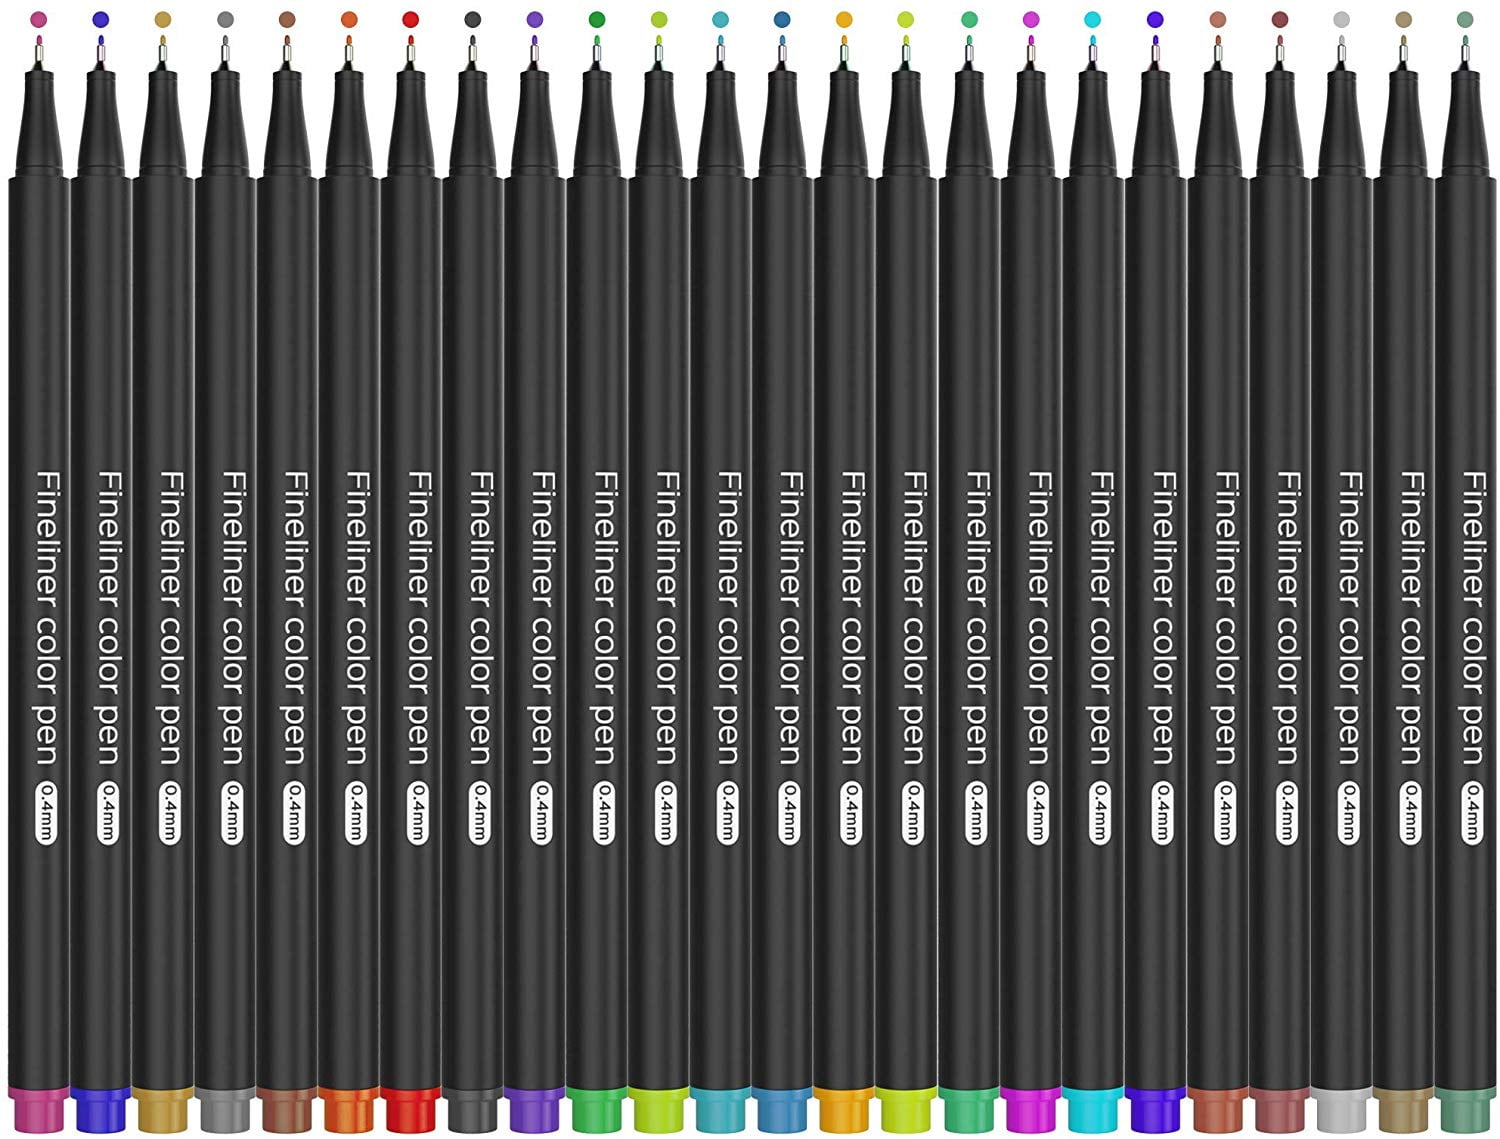 Bazic Fiero Assorted Color Fiber Tip Fineliner Pen (4/Pack)